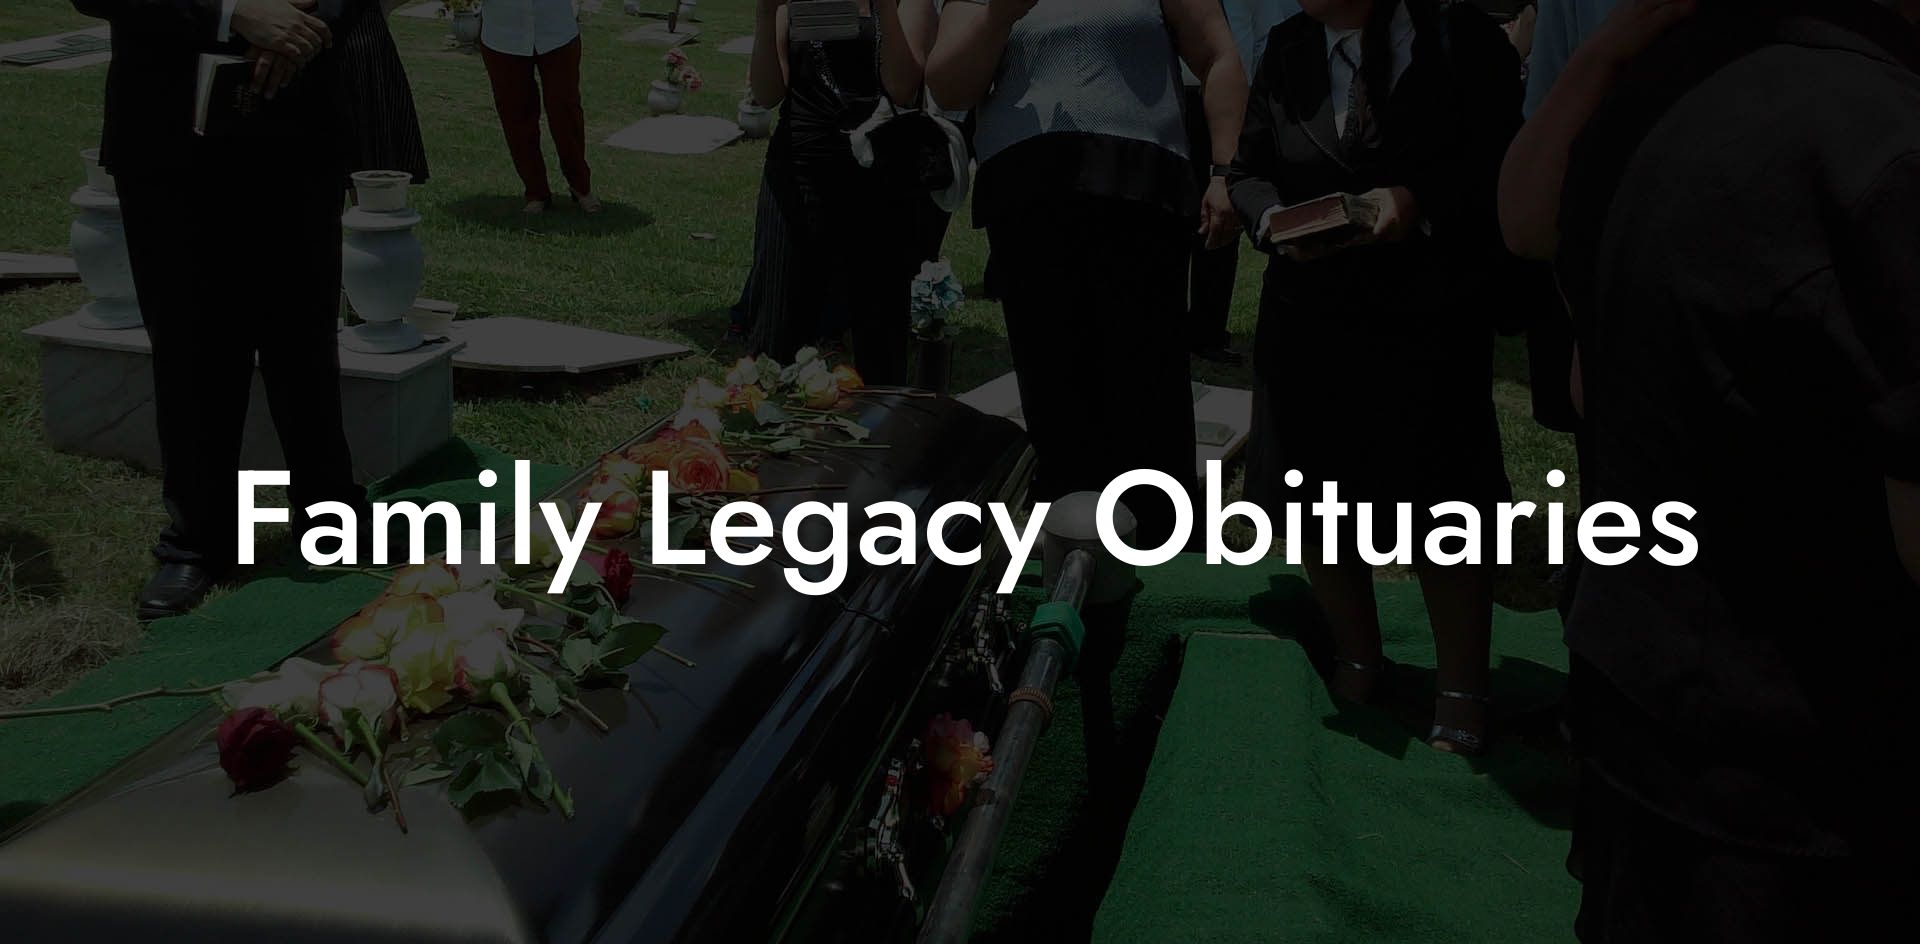 Family Legacy Obituaries